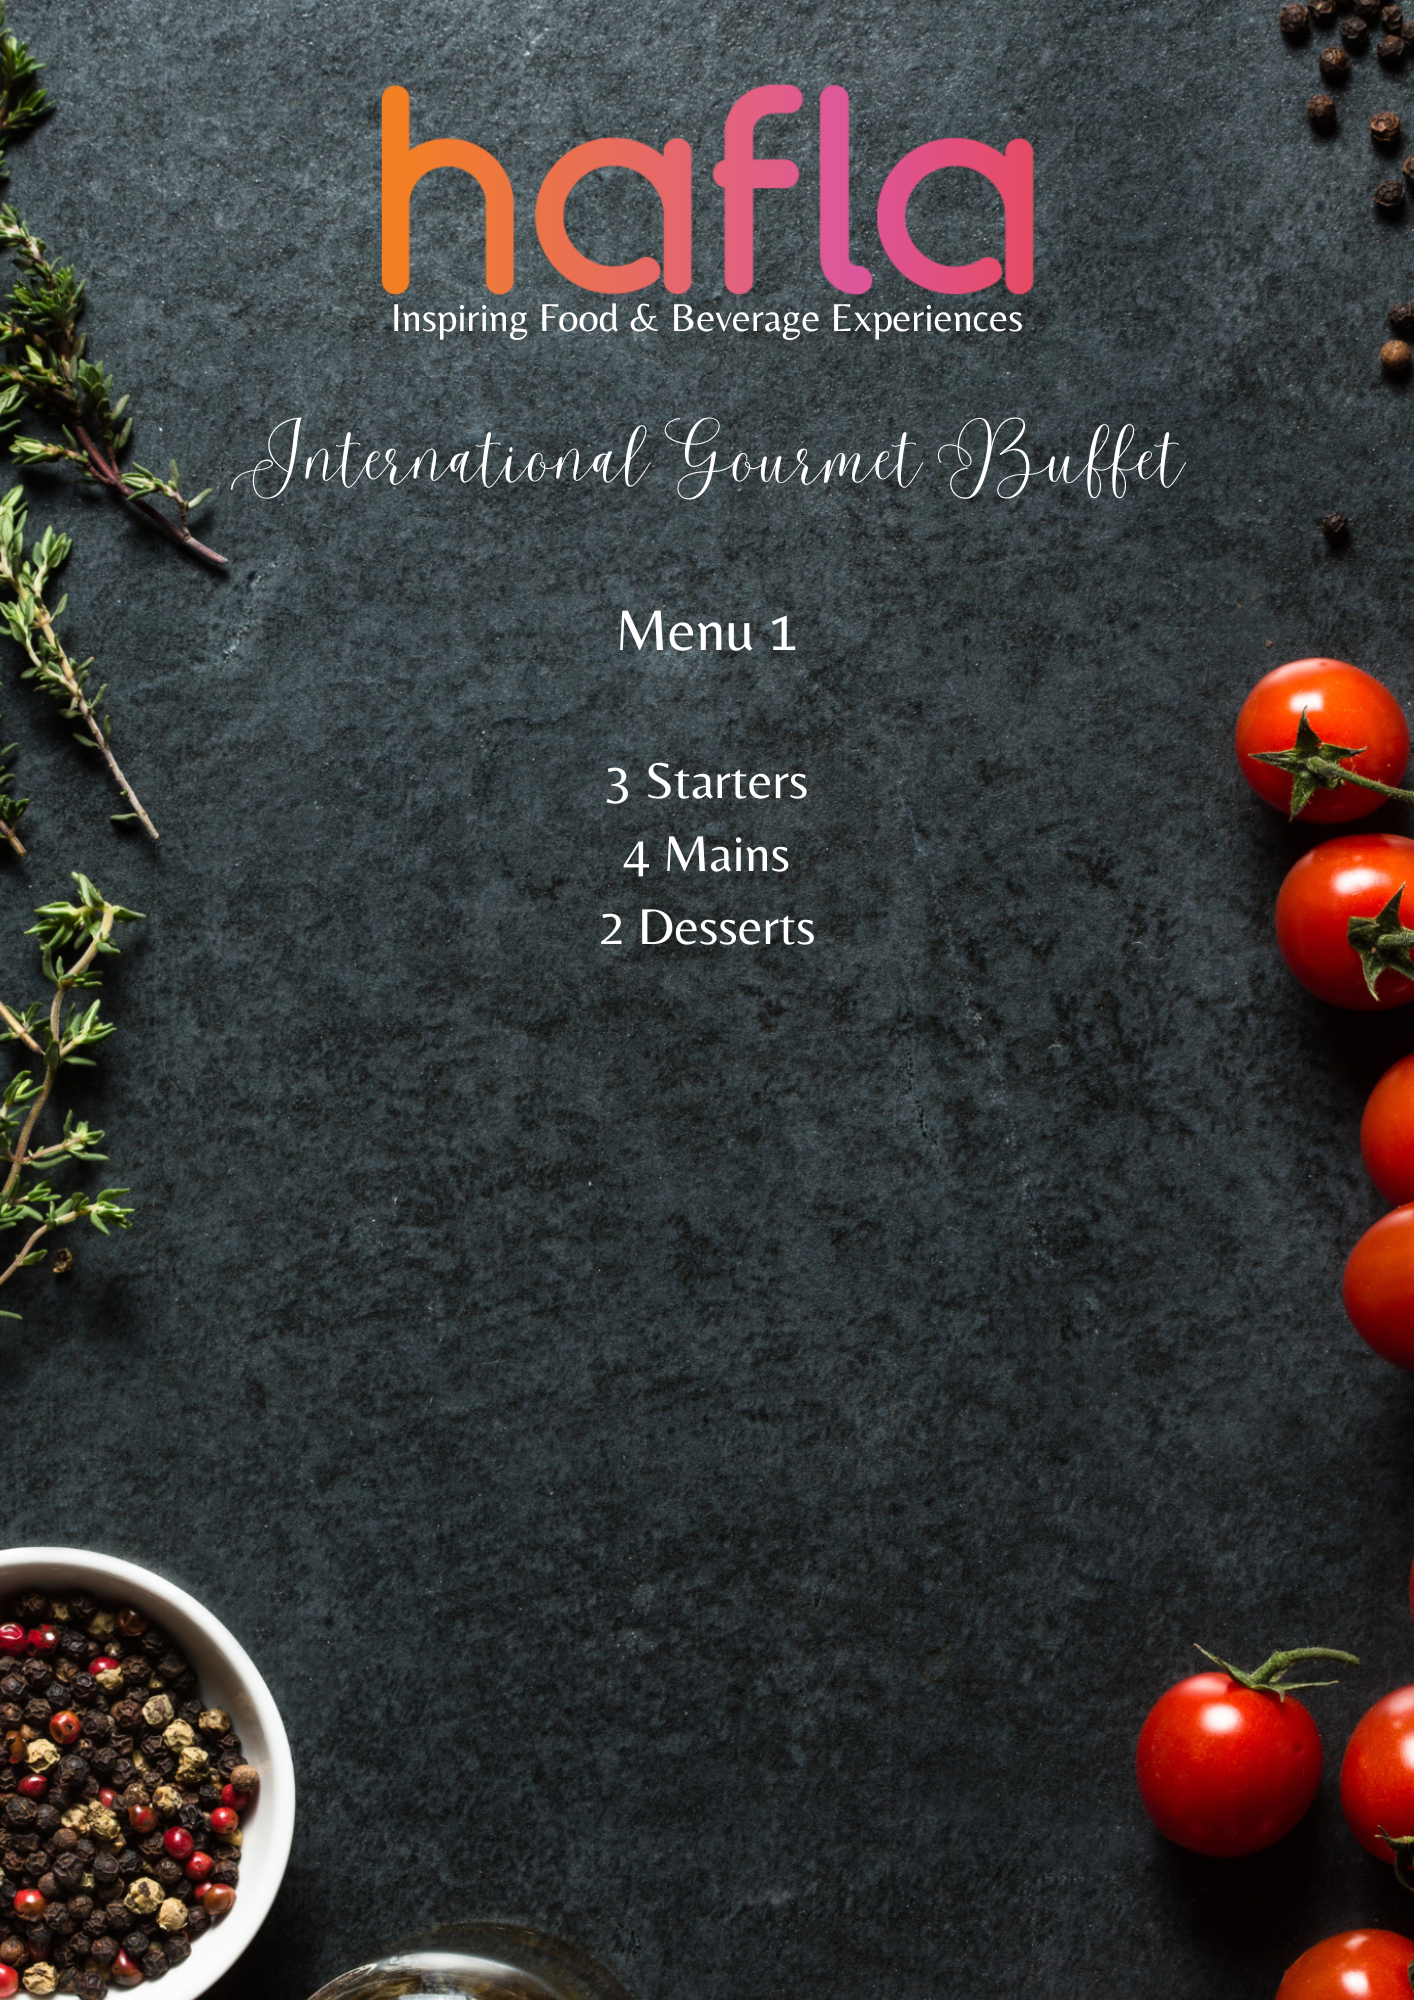 International Gourmet Buffet by Paprika Dubai